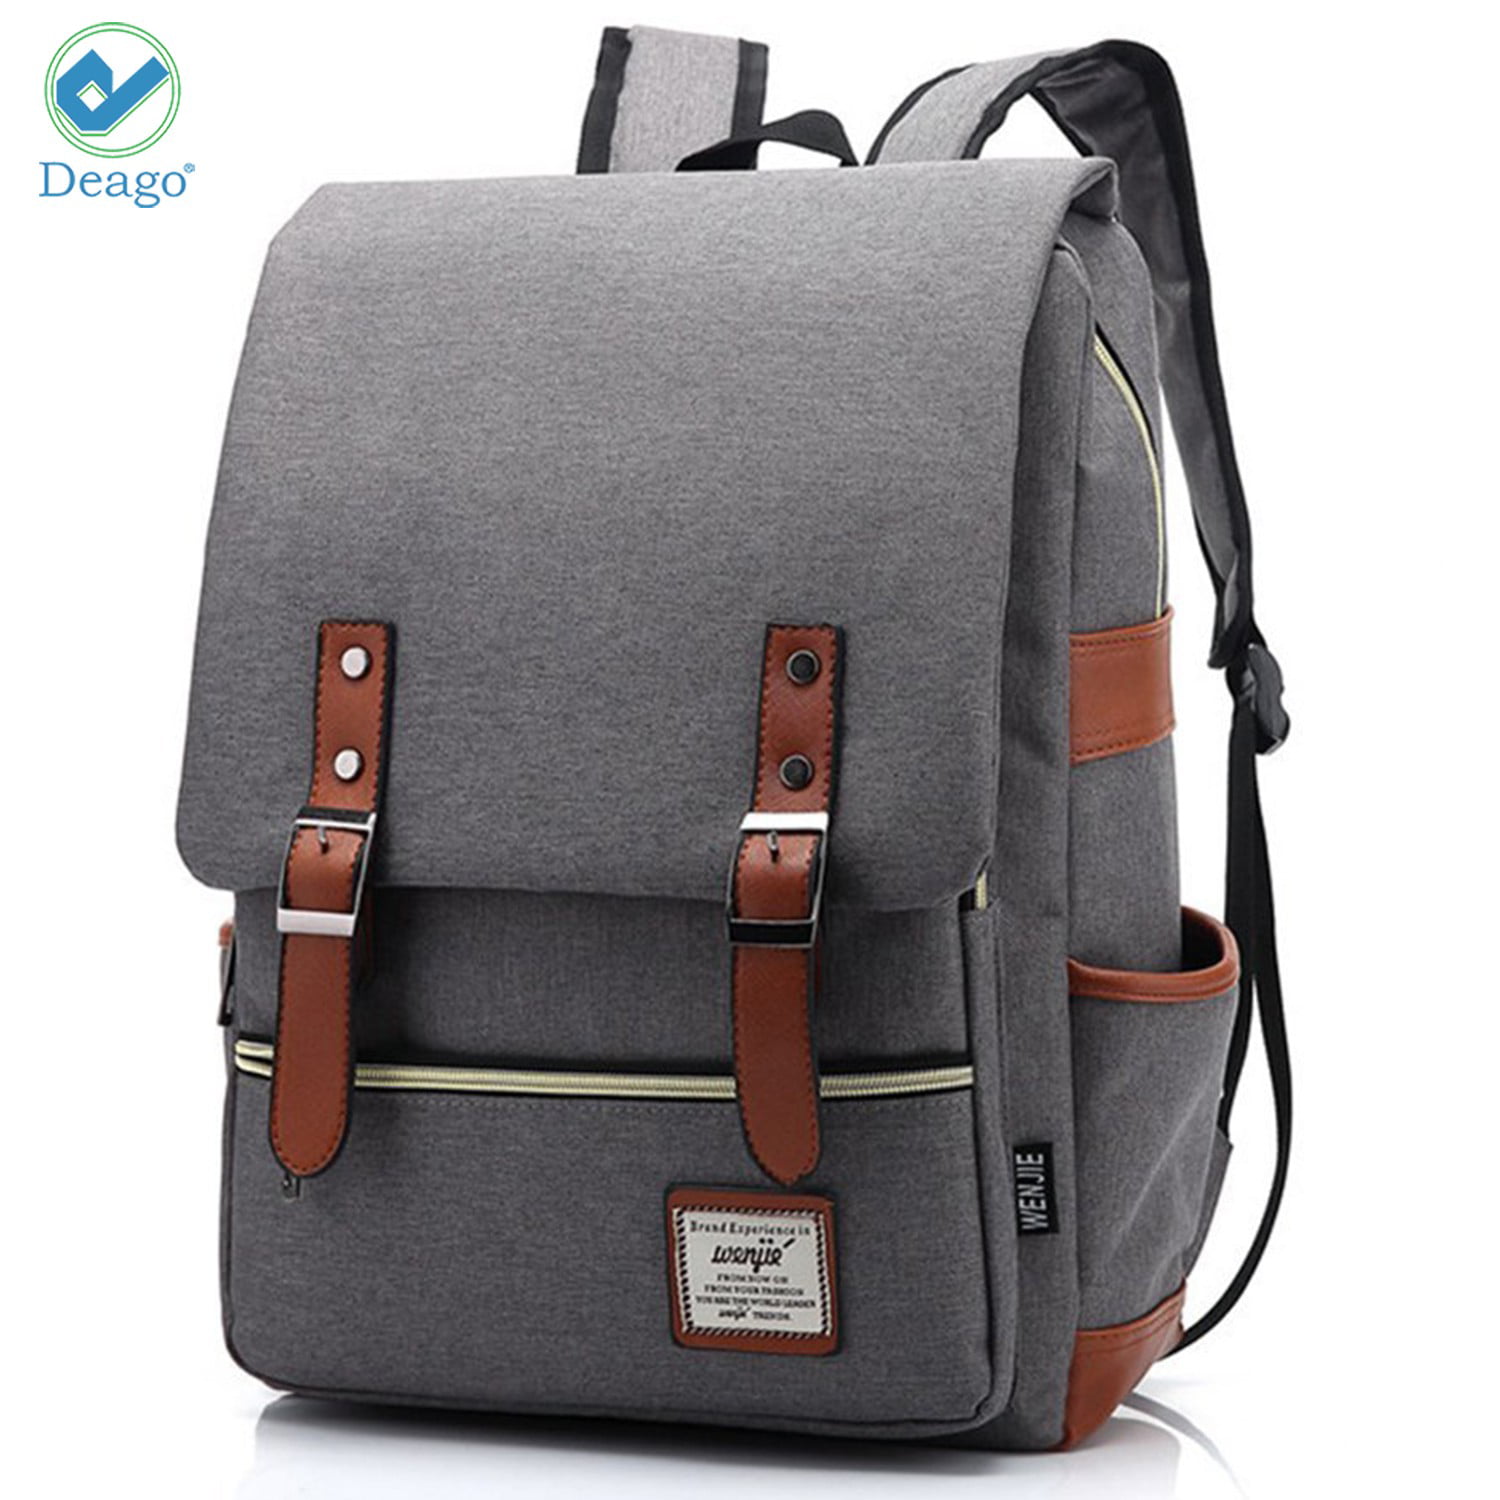 Deago - Deago Vintage Laptop Backpack For Women Men School College ...